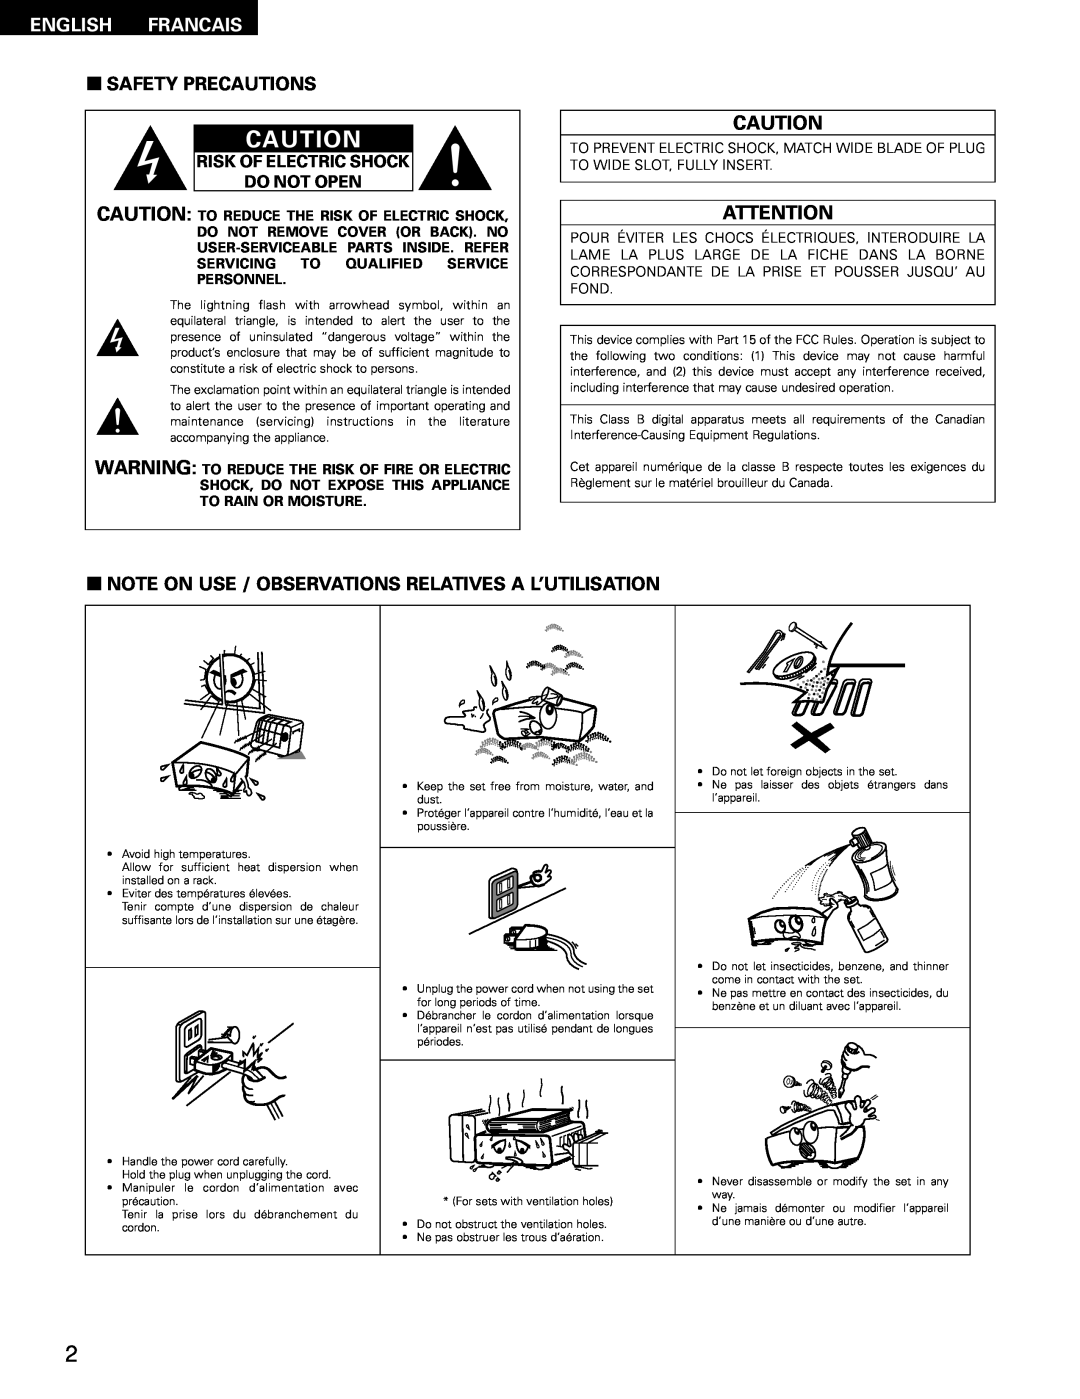 Denon AVR-1602, AVR-682 manual English Francais, 2SAFETY PRECAUTIONS, Risk Of Electric Shock Do Not Open 